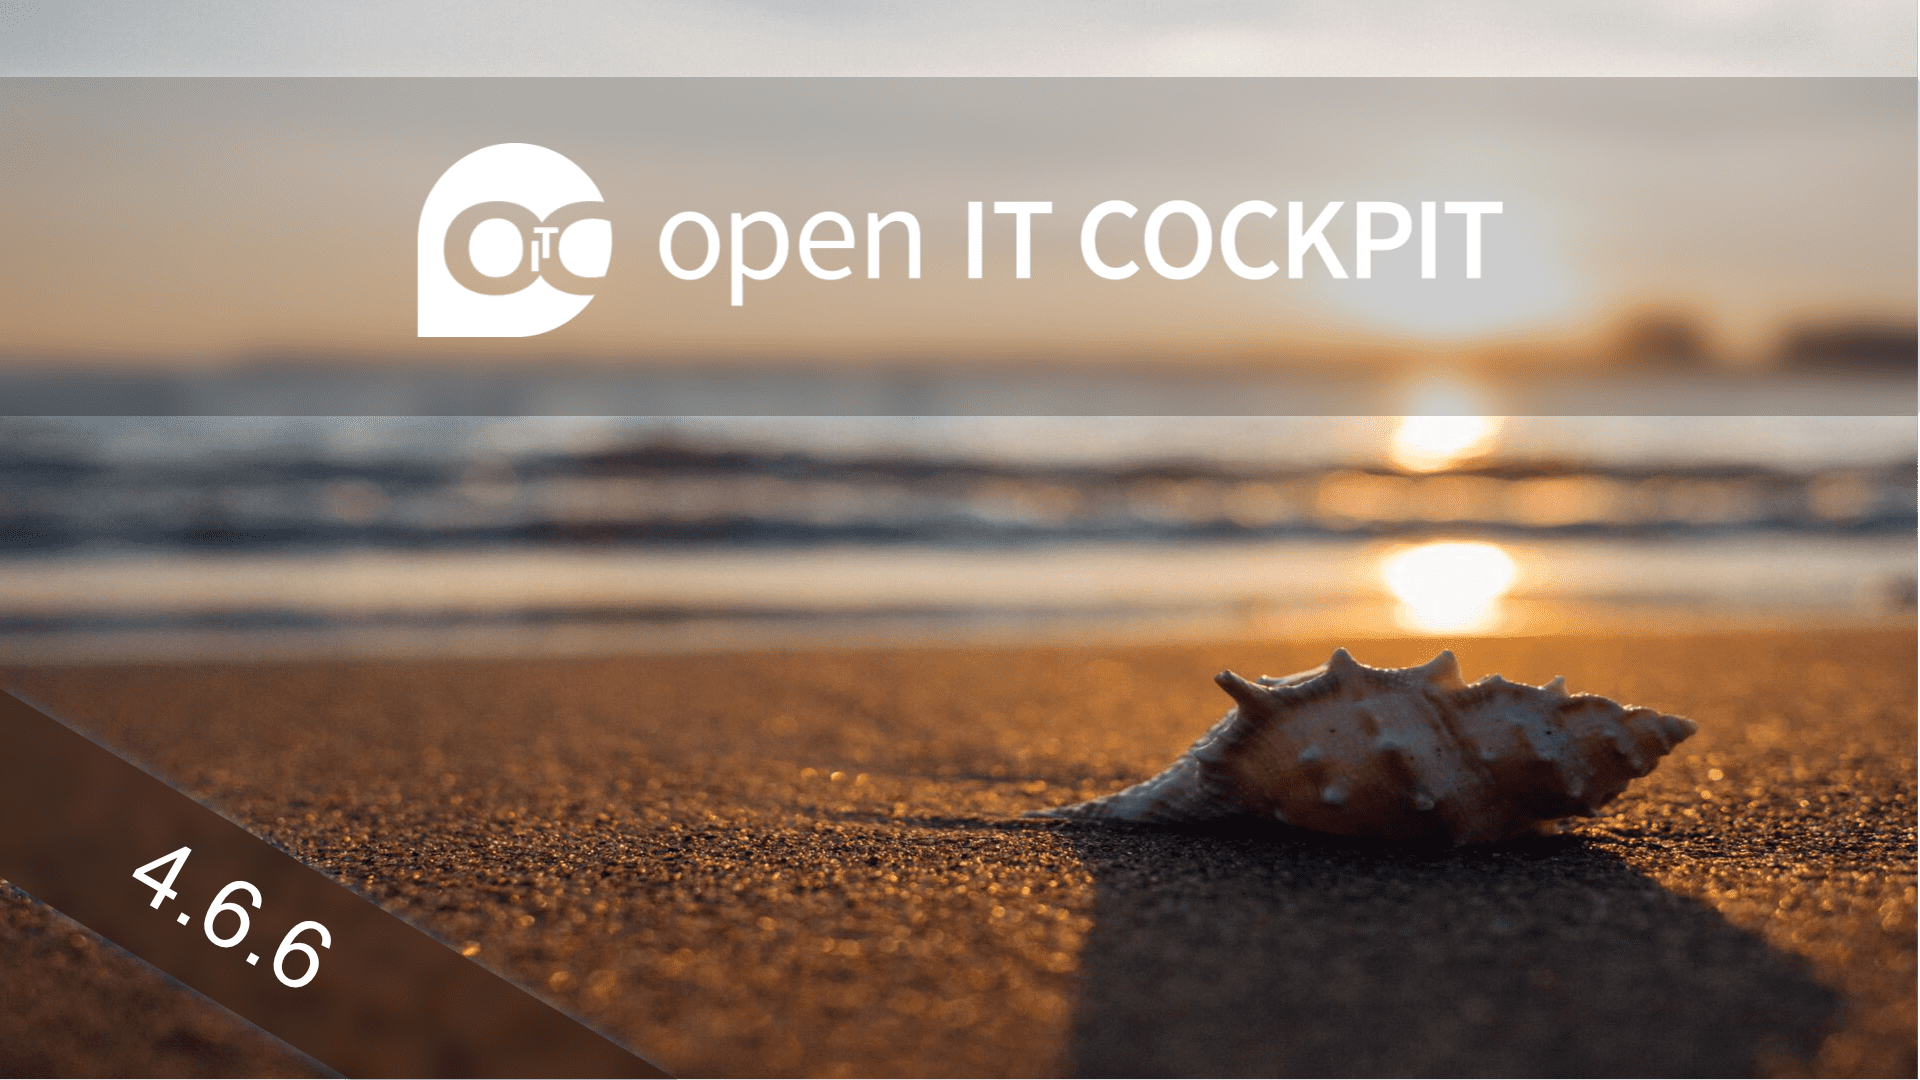 openITCOCKPIT 4.6.6 released